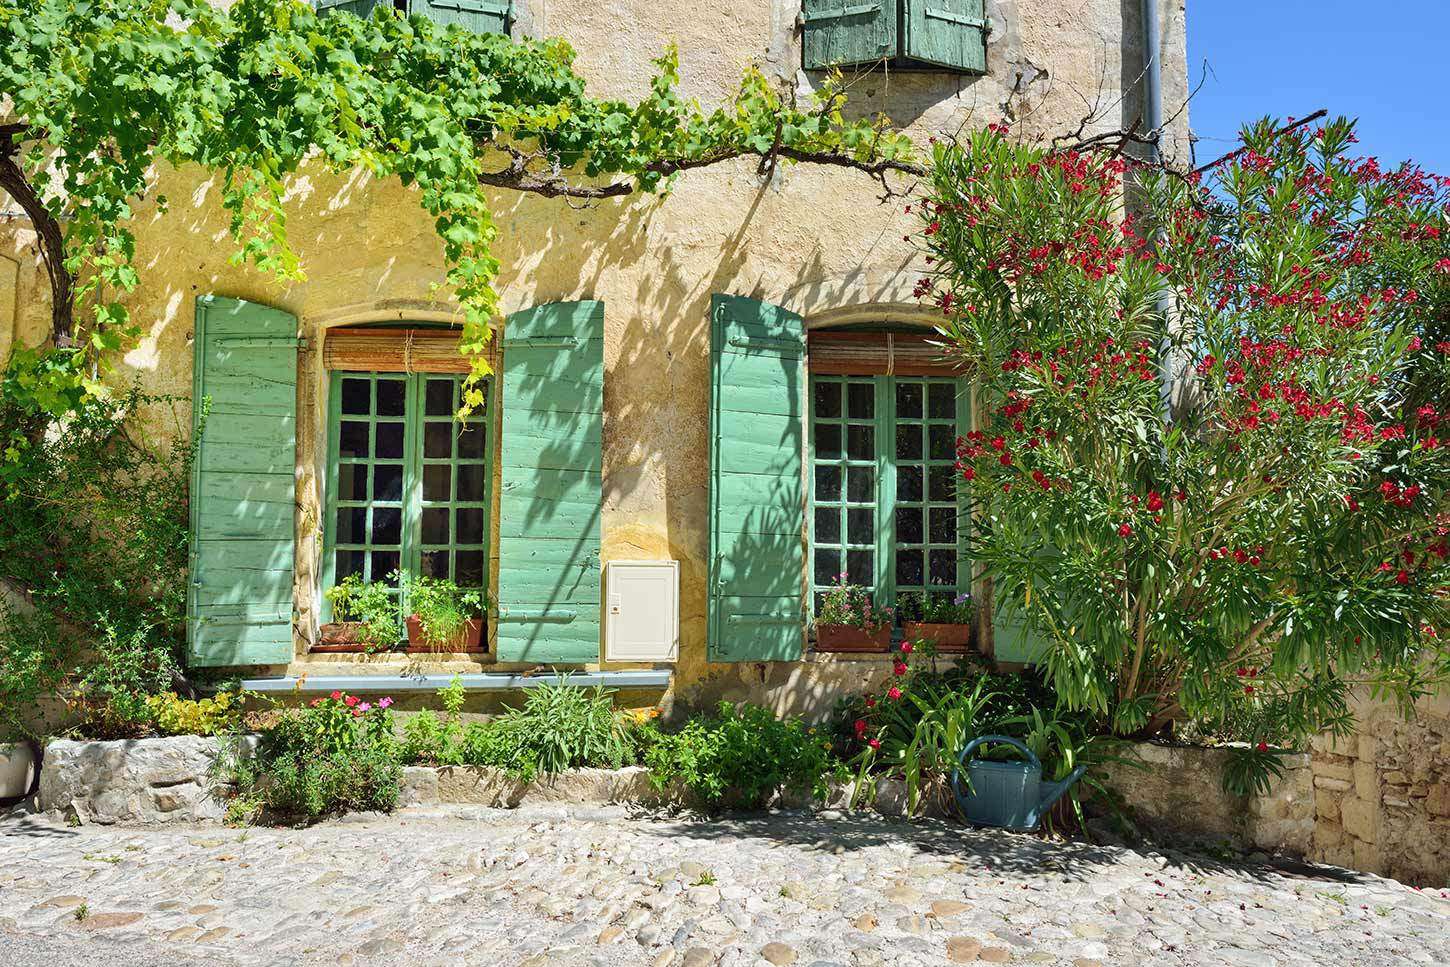 Provence. Puzzlespiel online